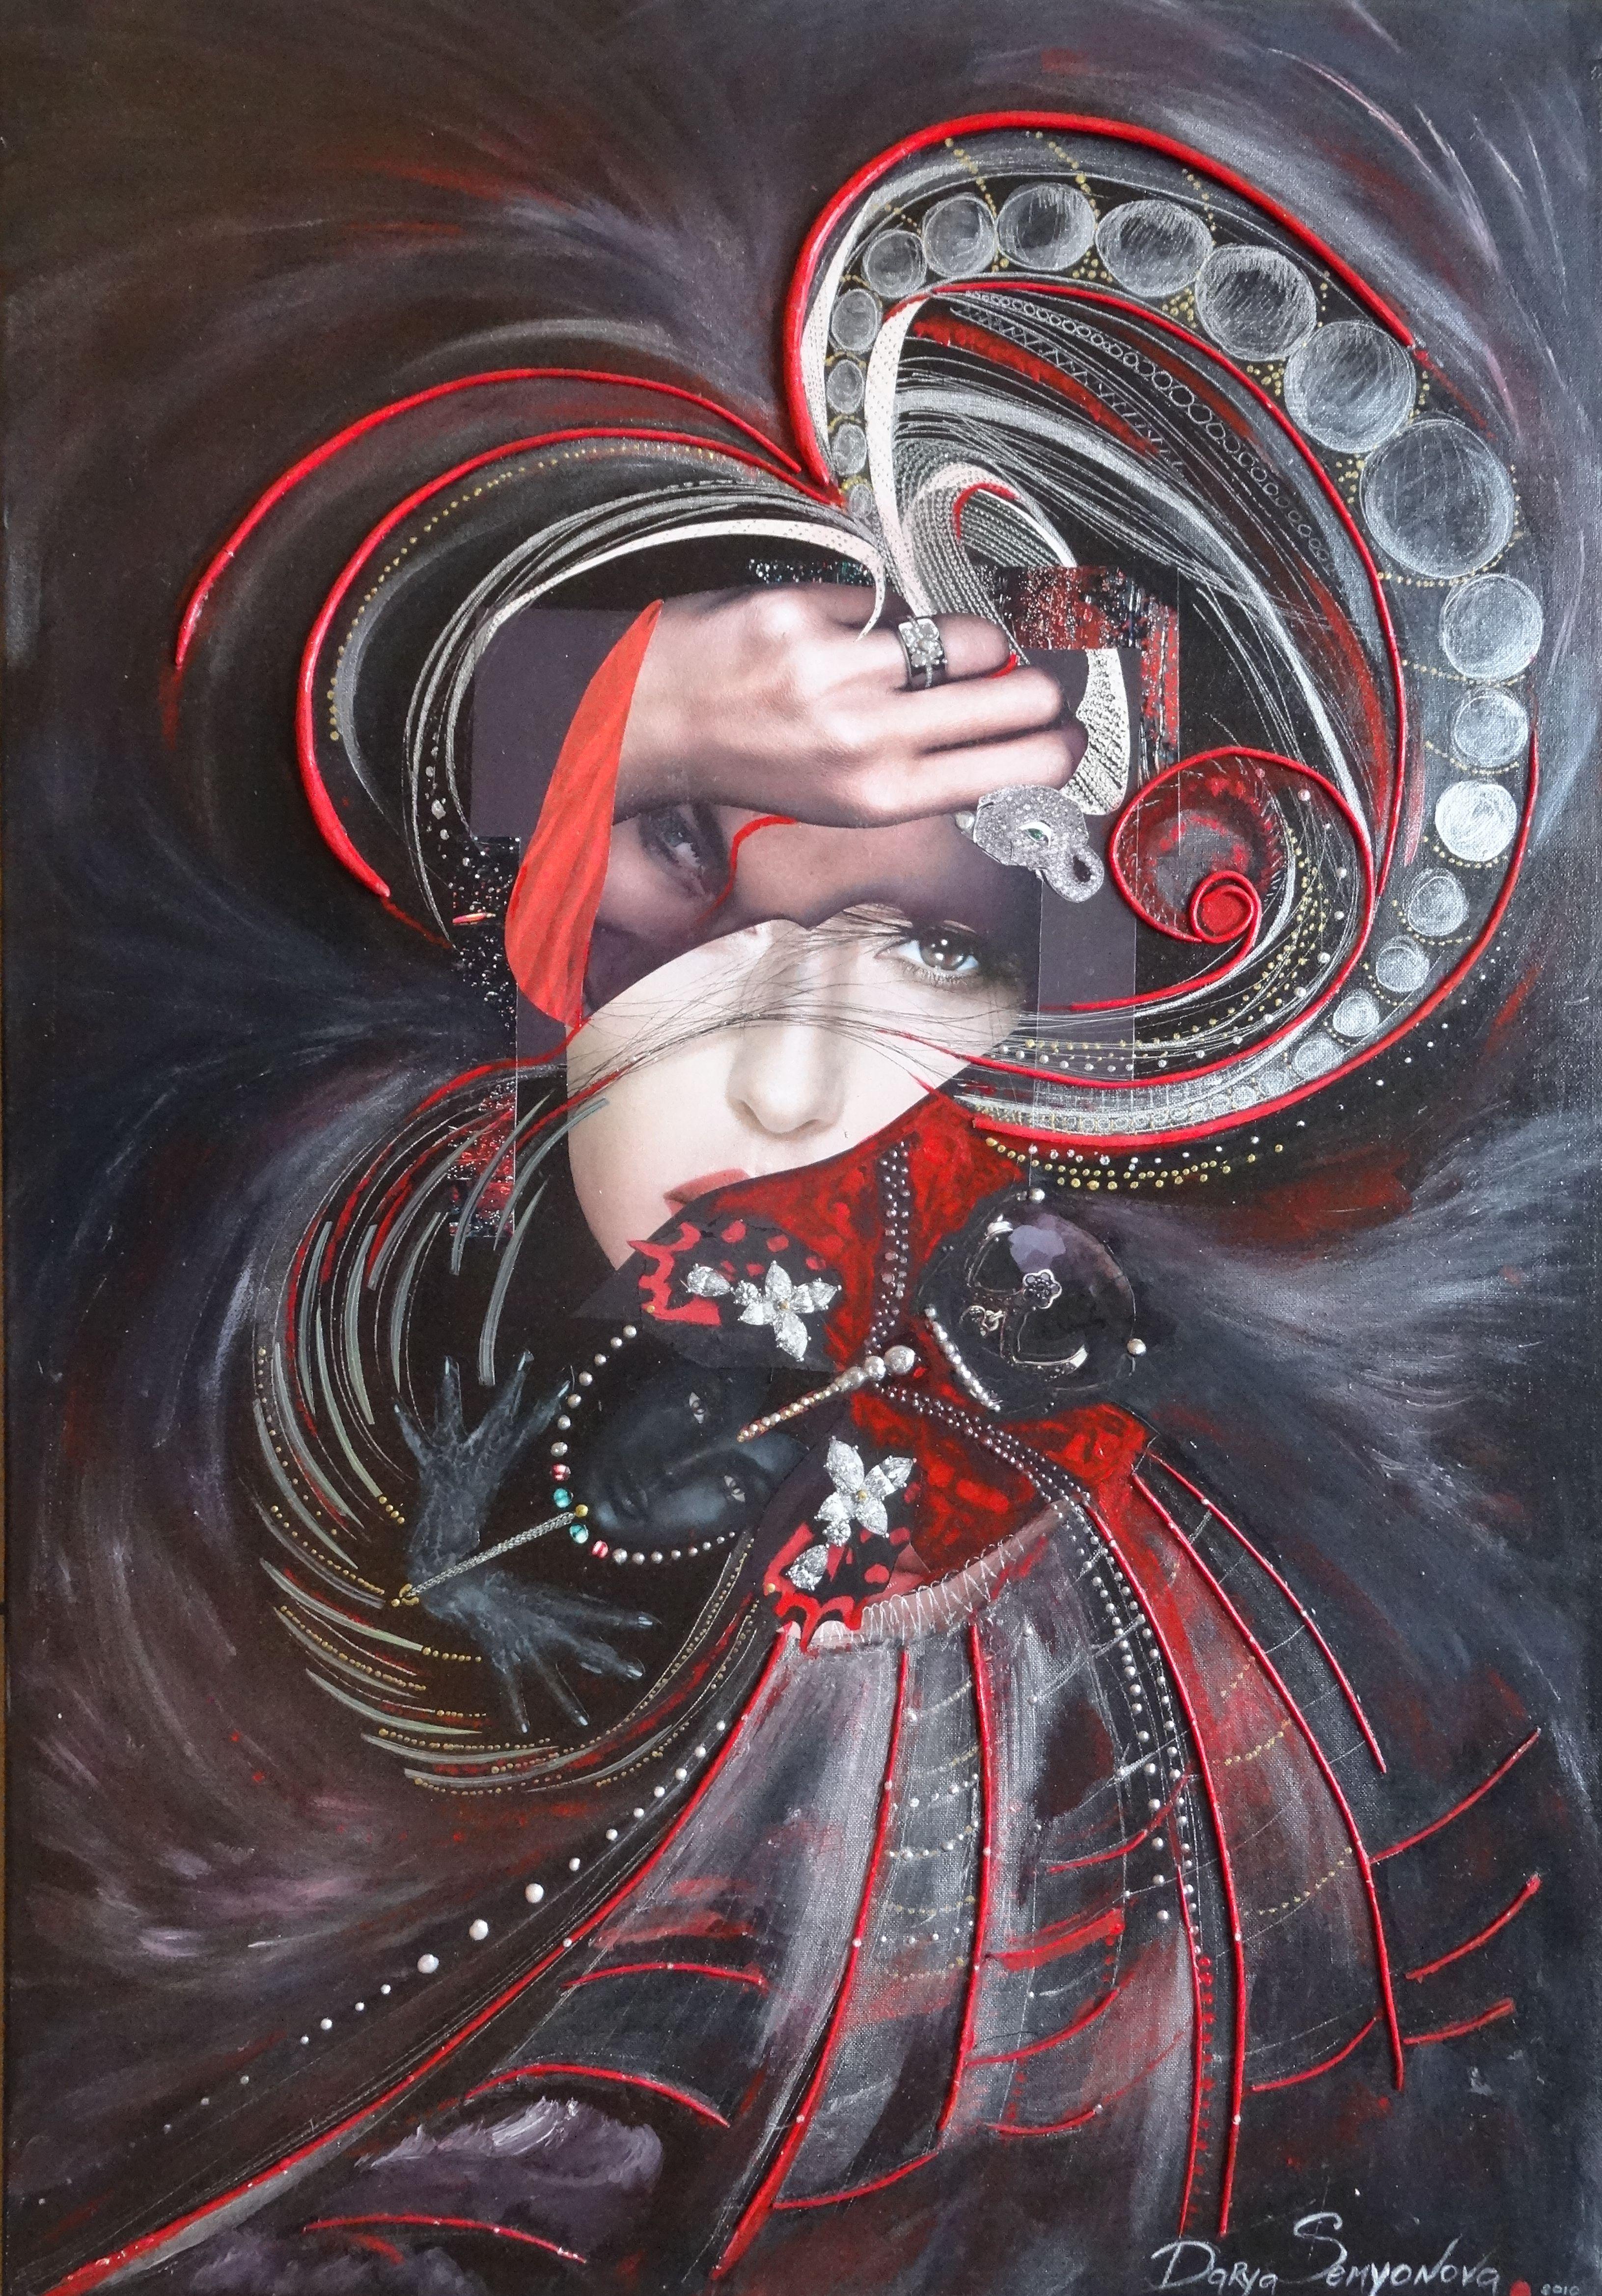 Darya Semyonova Portrait Painting - Fantasy. 2010. Mixed media, collage on canvas, 100x70 cm